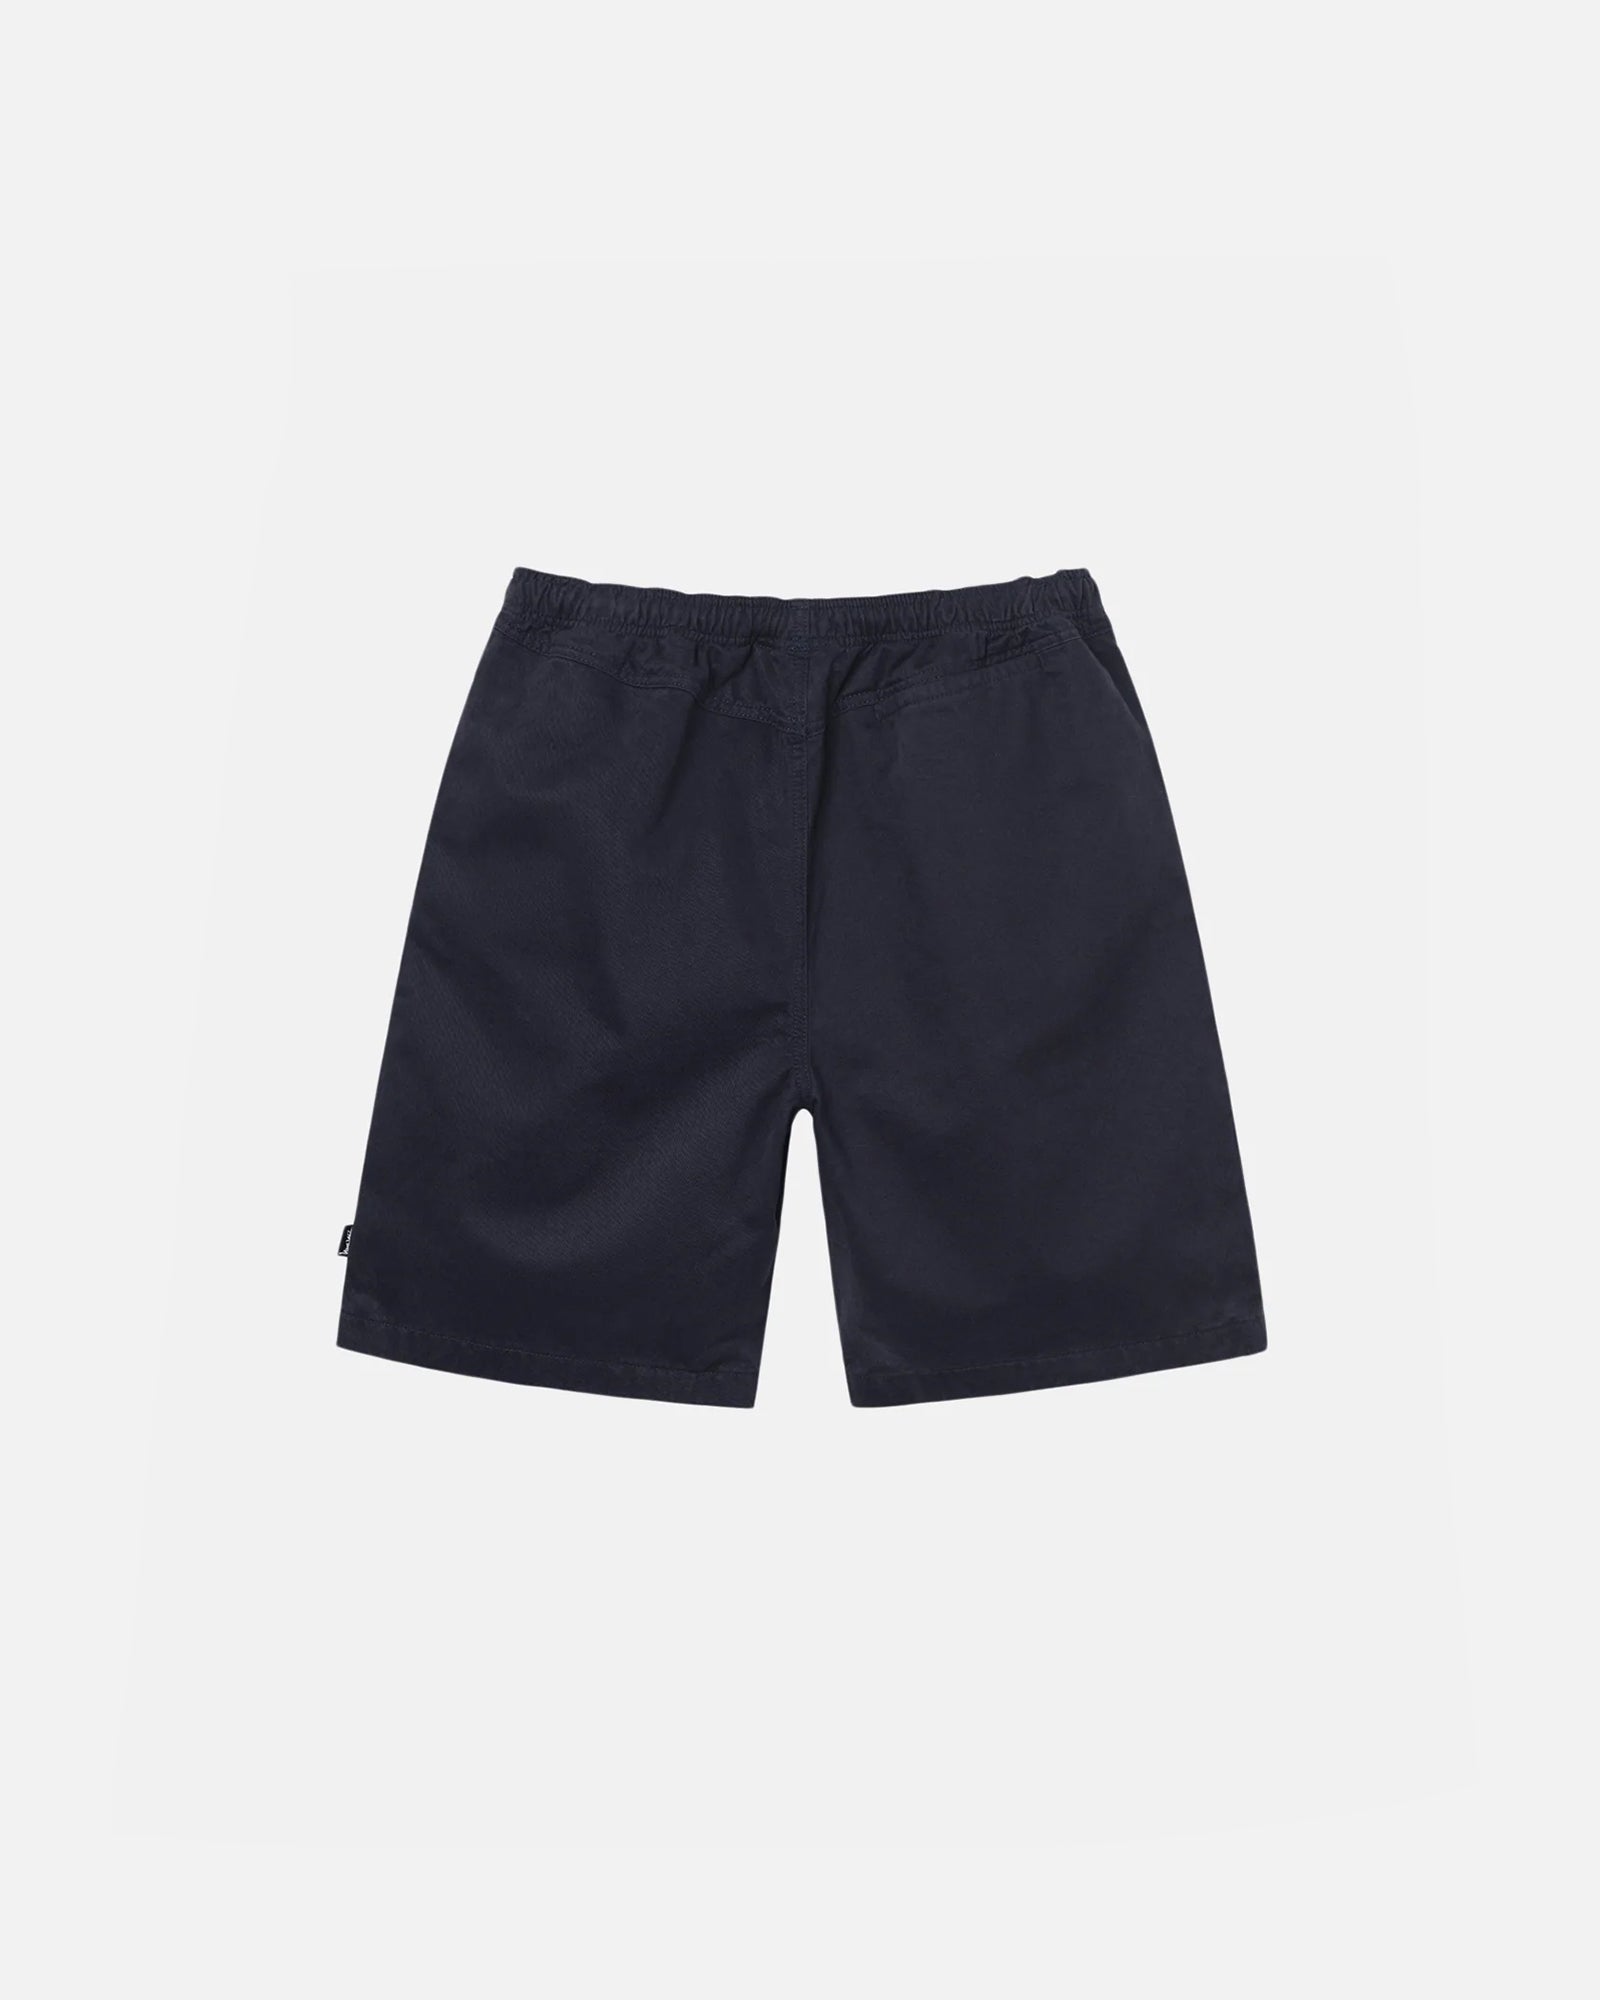 Stüssy Beach Short Brushed Cotton Navy Shorts